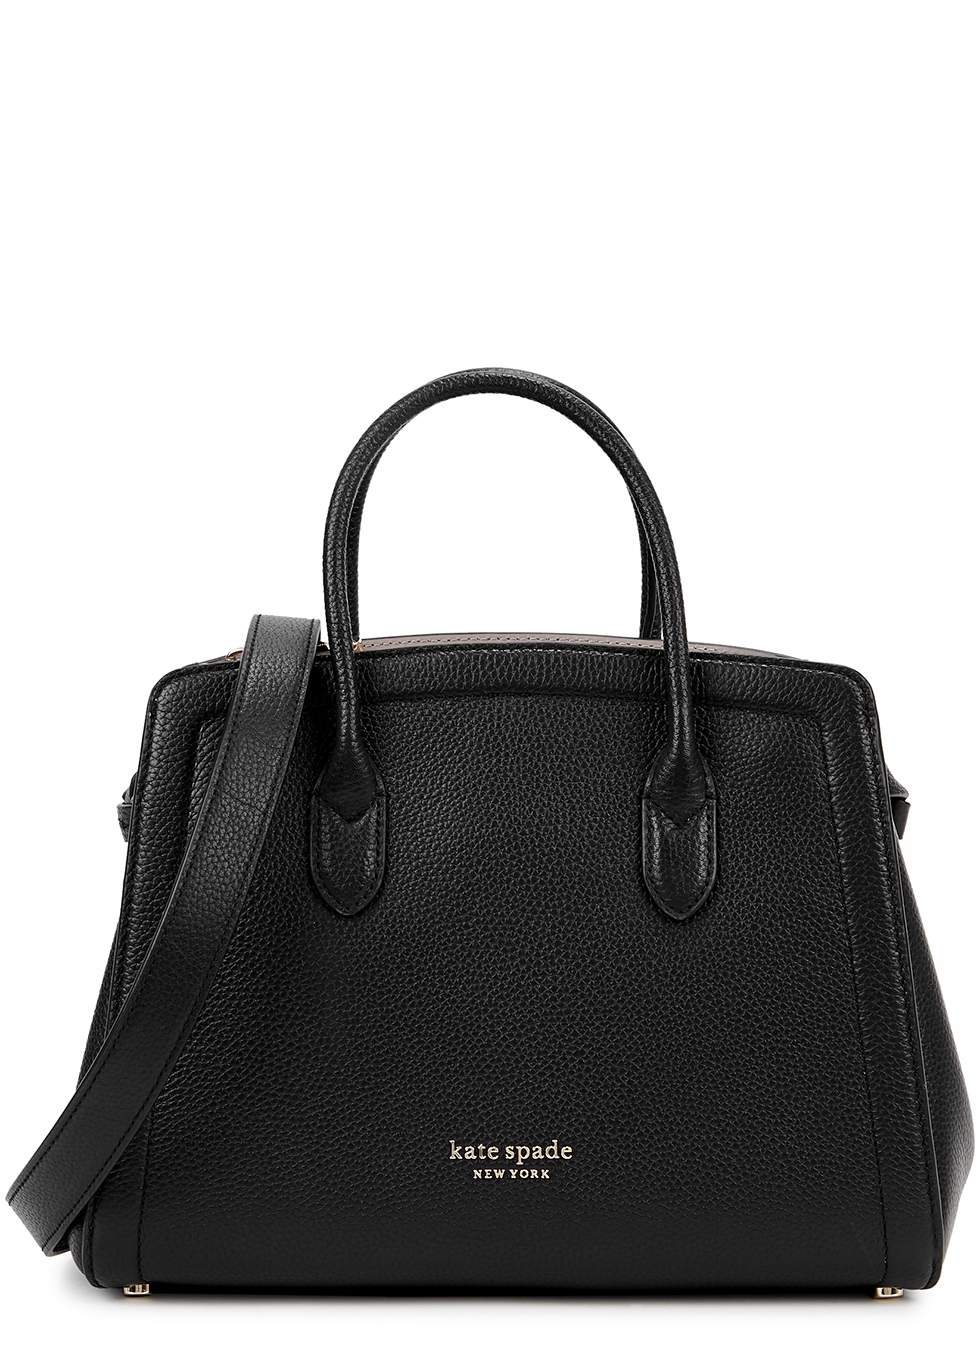 Kate Spade New York Knott medium black leather top handle bag - Harvey ...